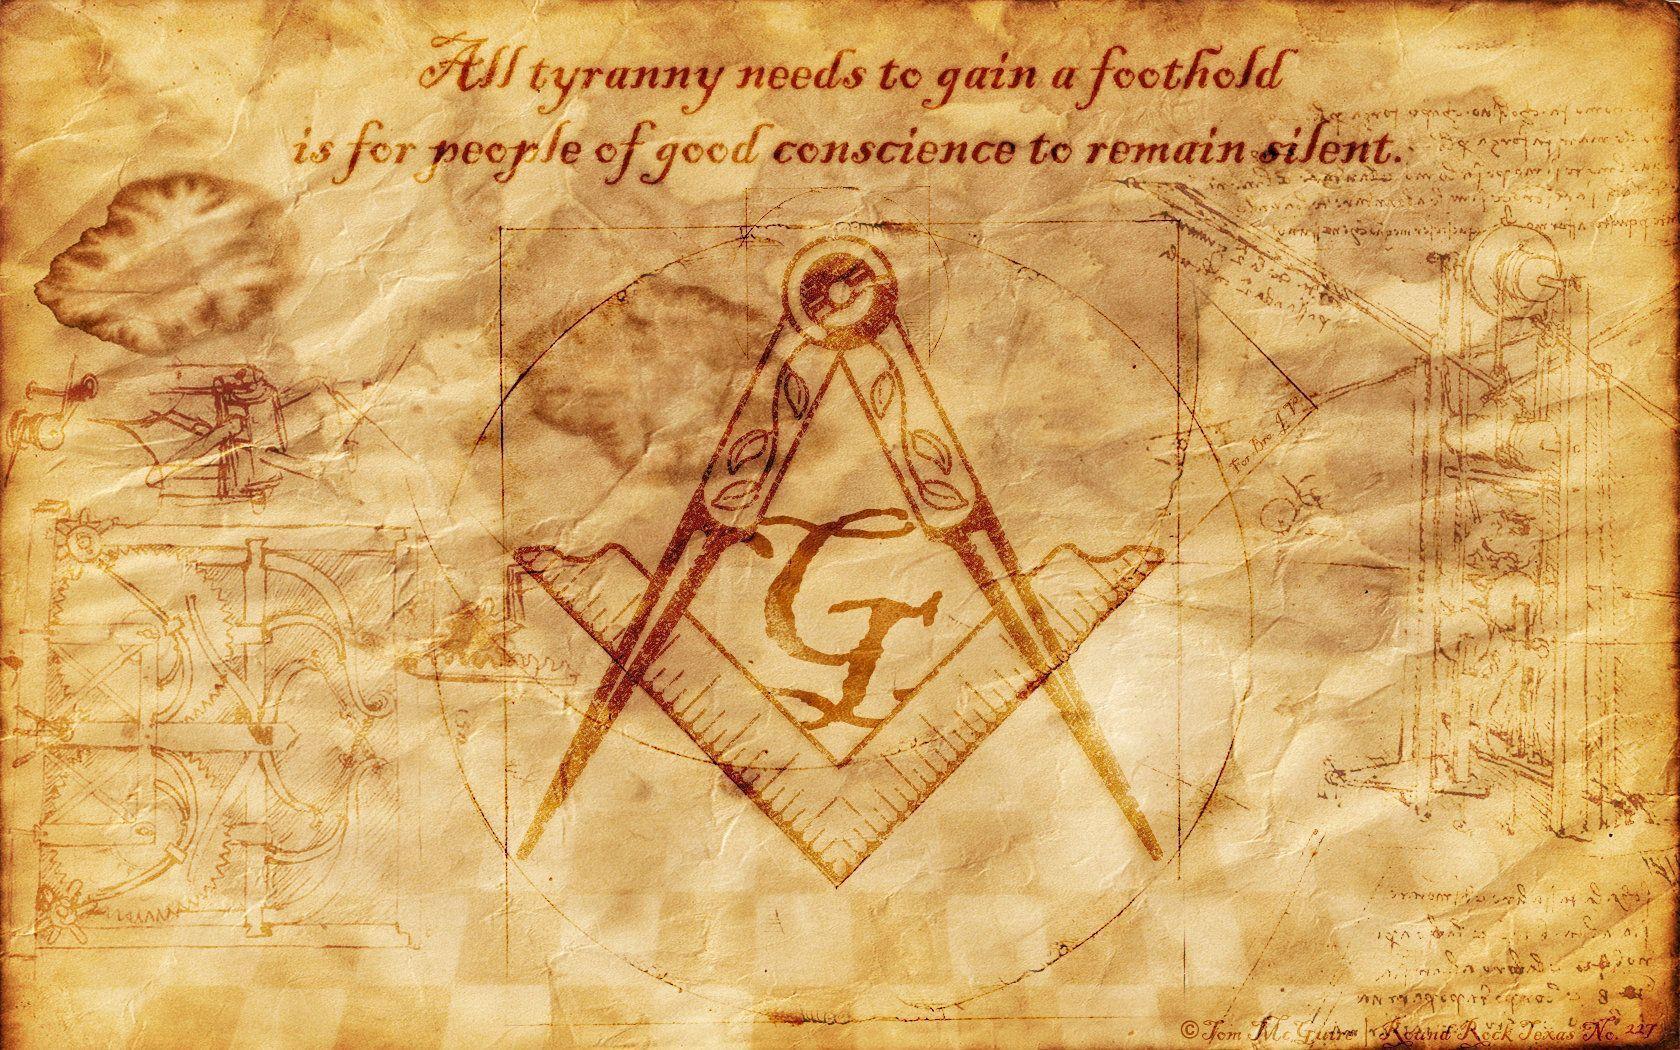 Masonic Desktop Background.Com Archive